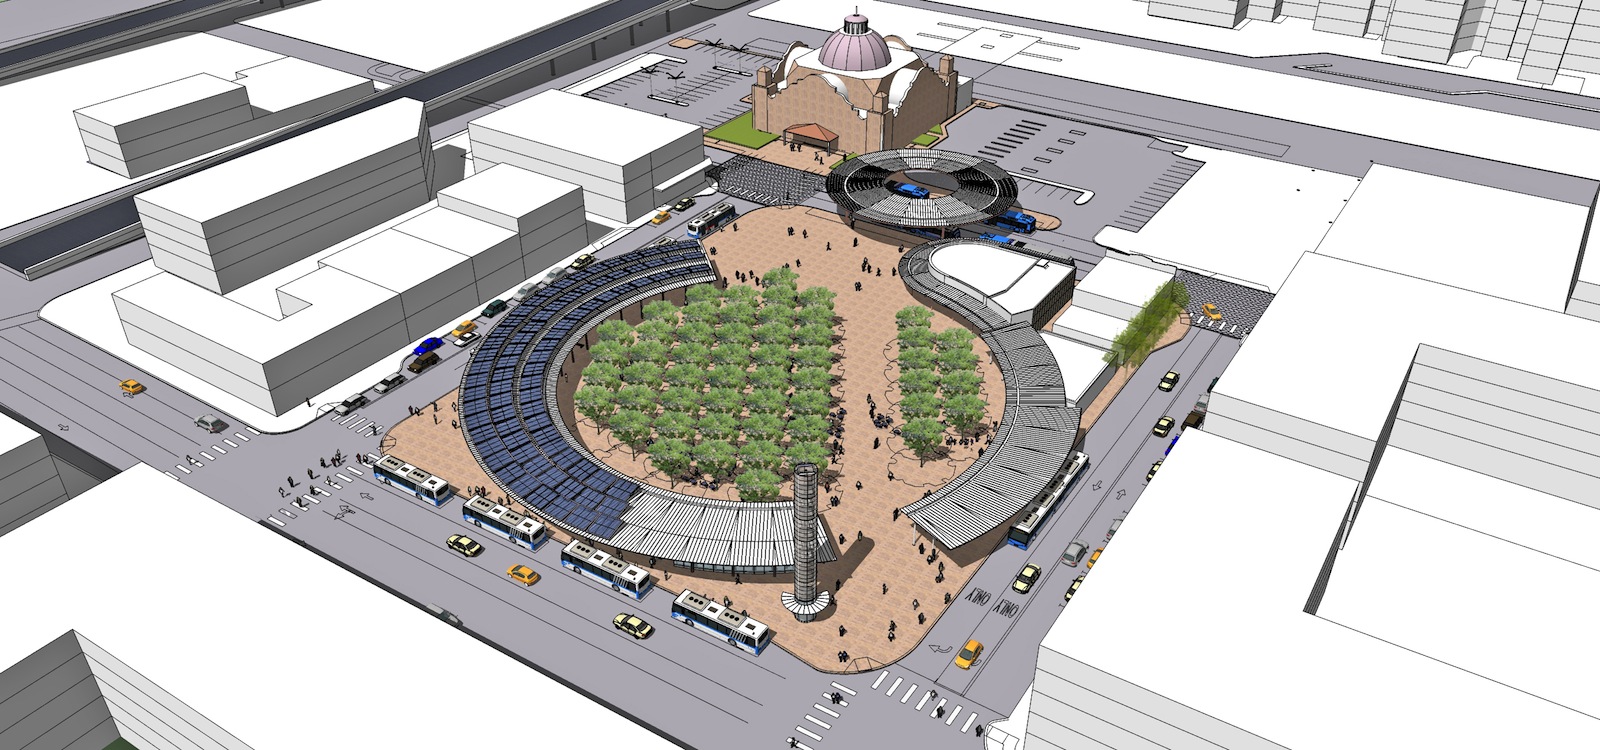 The design vision for Westside Multimodal Transit Center balances mass transit w